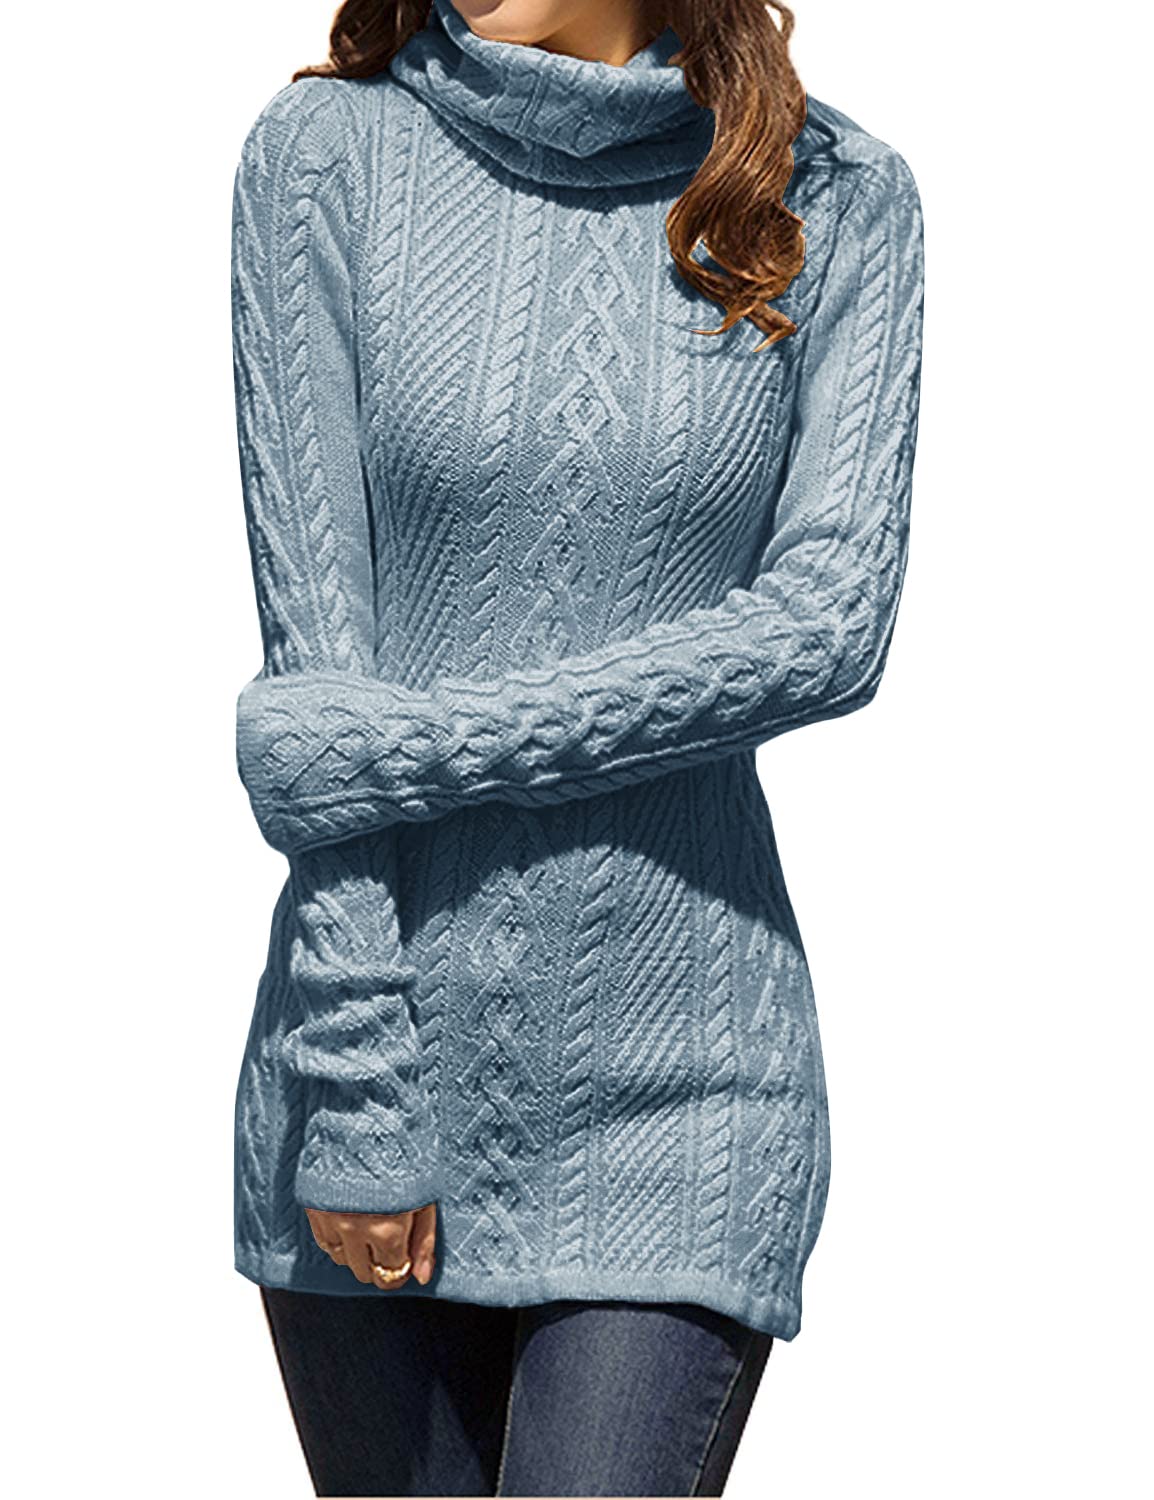 v28 Women Polo Neck Knit Stretchable Elasticity Long Slim Sweater (US Size 12-16, Baby Blue)